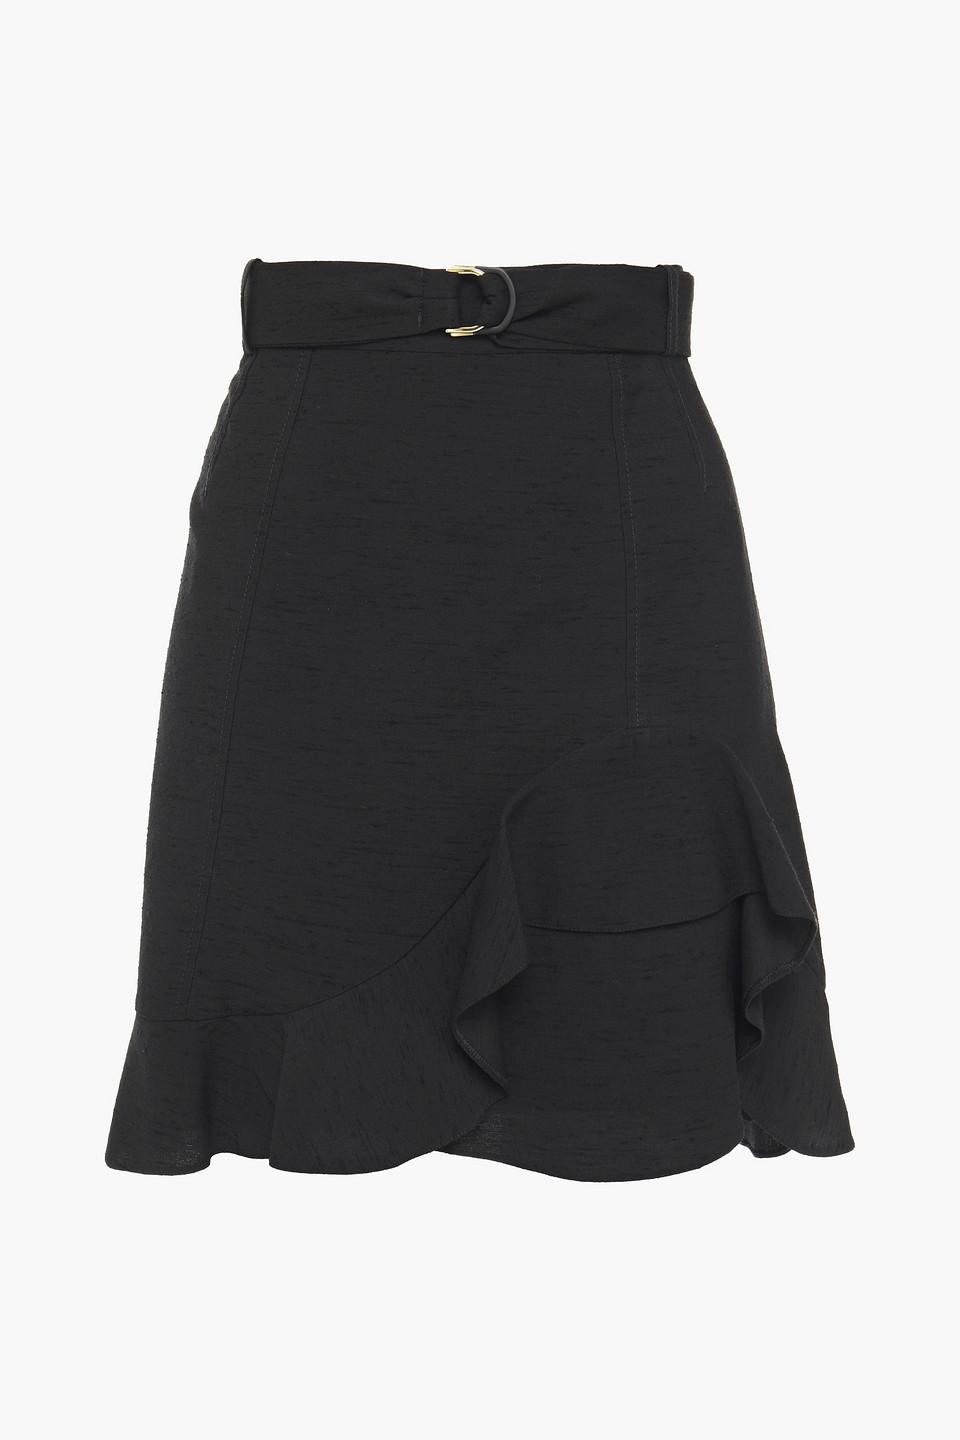 Sandro Amy Belted Ruffled Slub Woven Mini Skirt in Black | Lyst